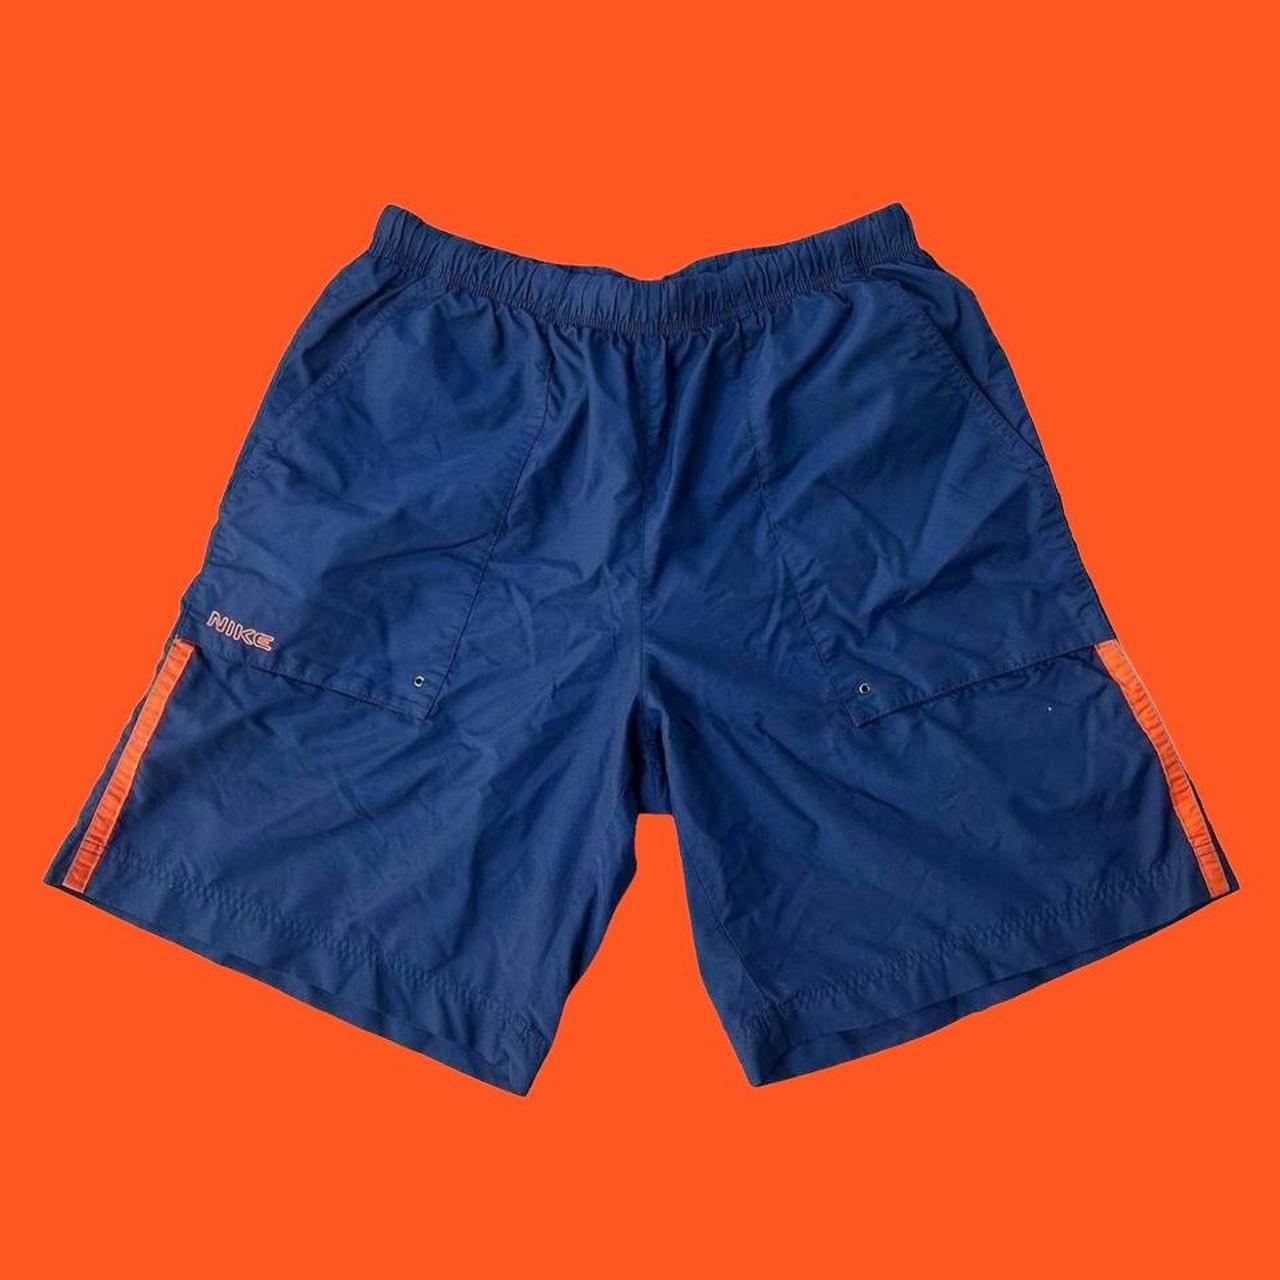 Nike Men's Navy and Orange Swim-briefs-shorts